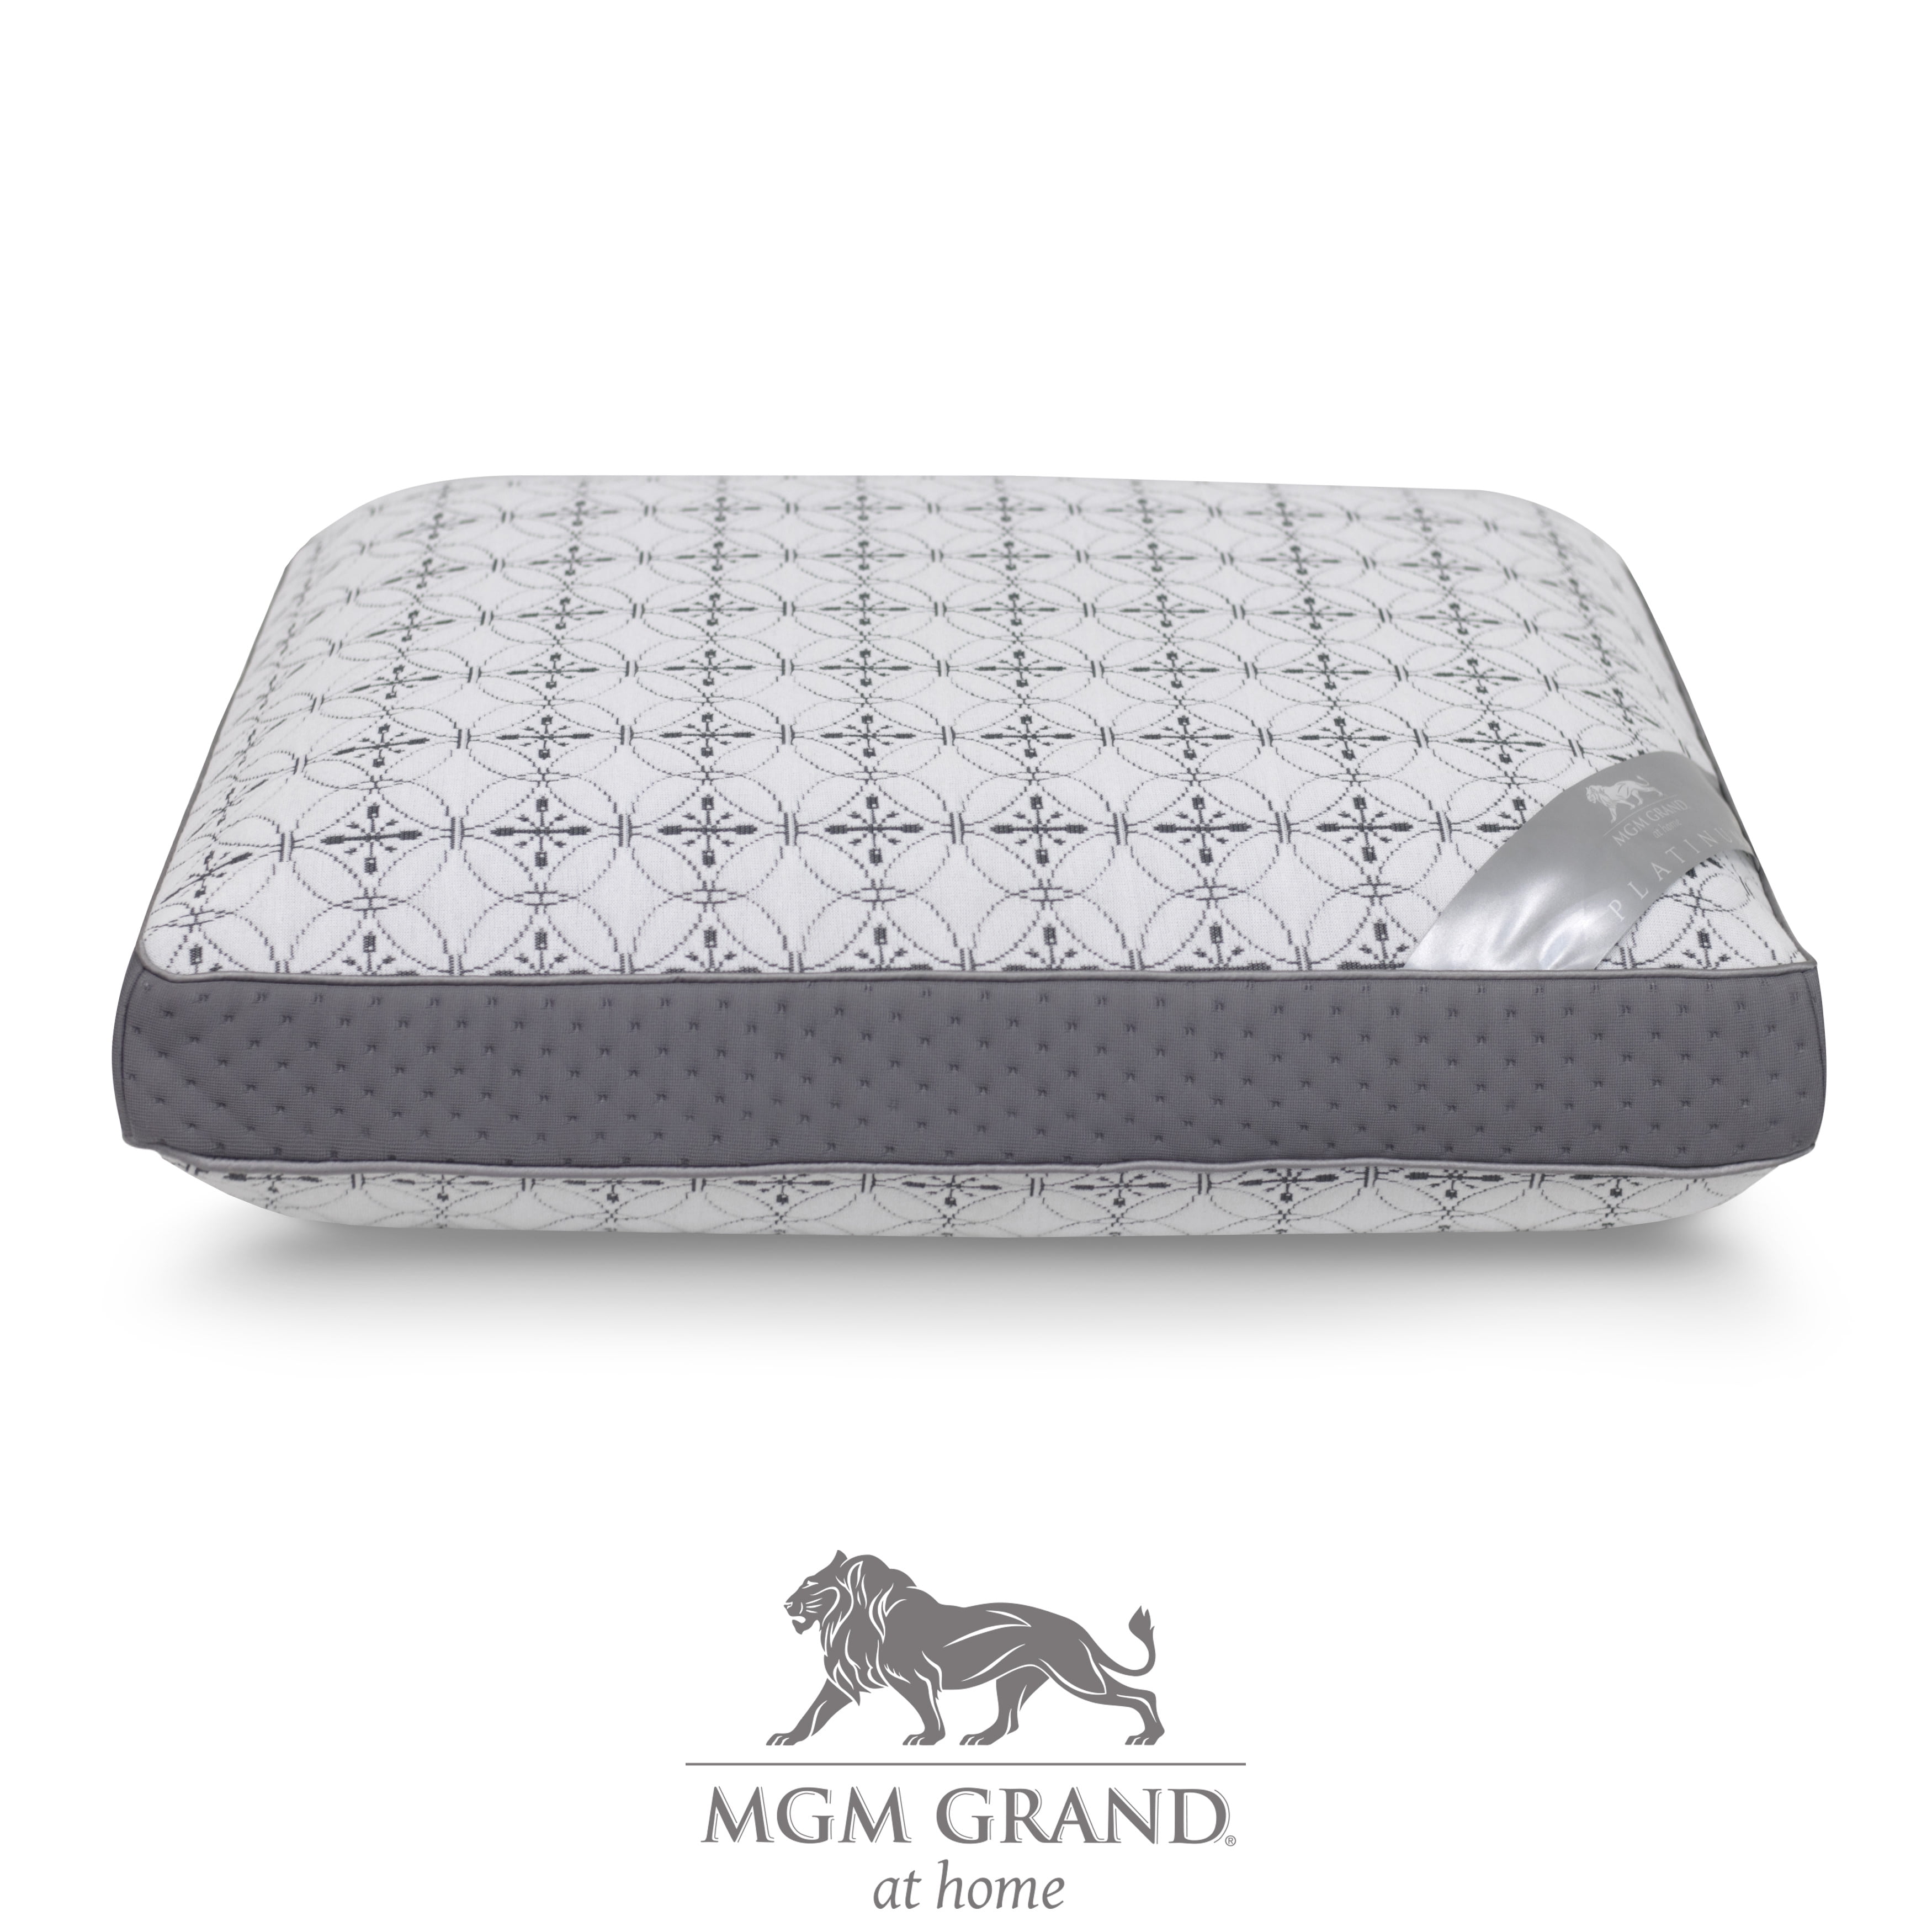 mgm grand pillows